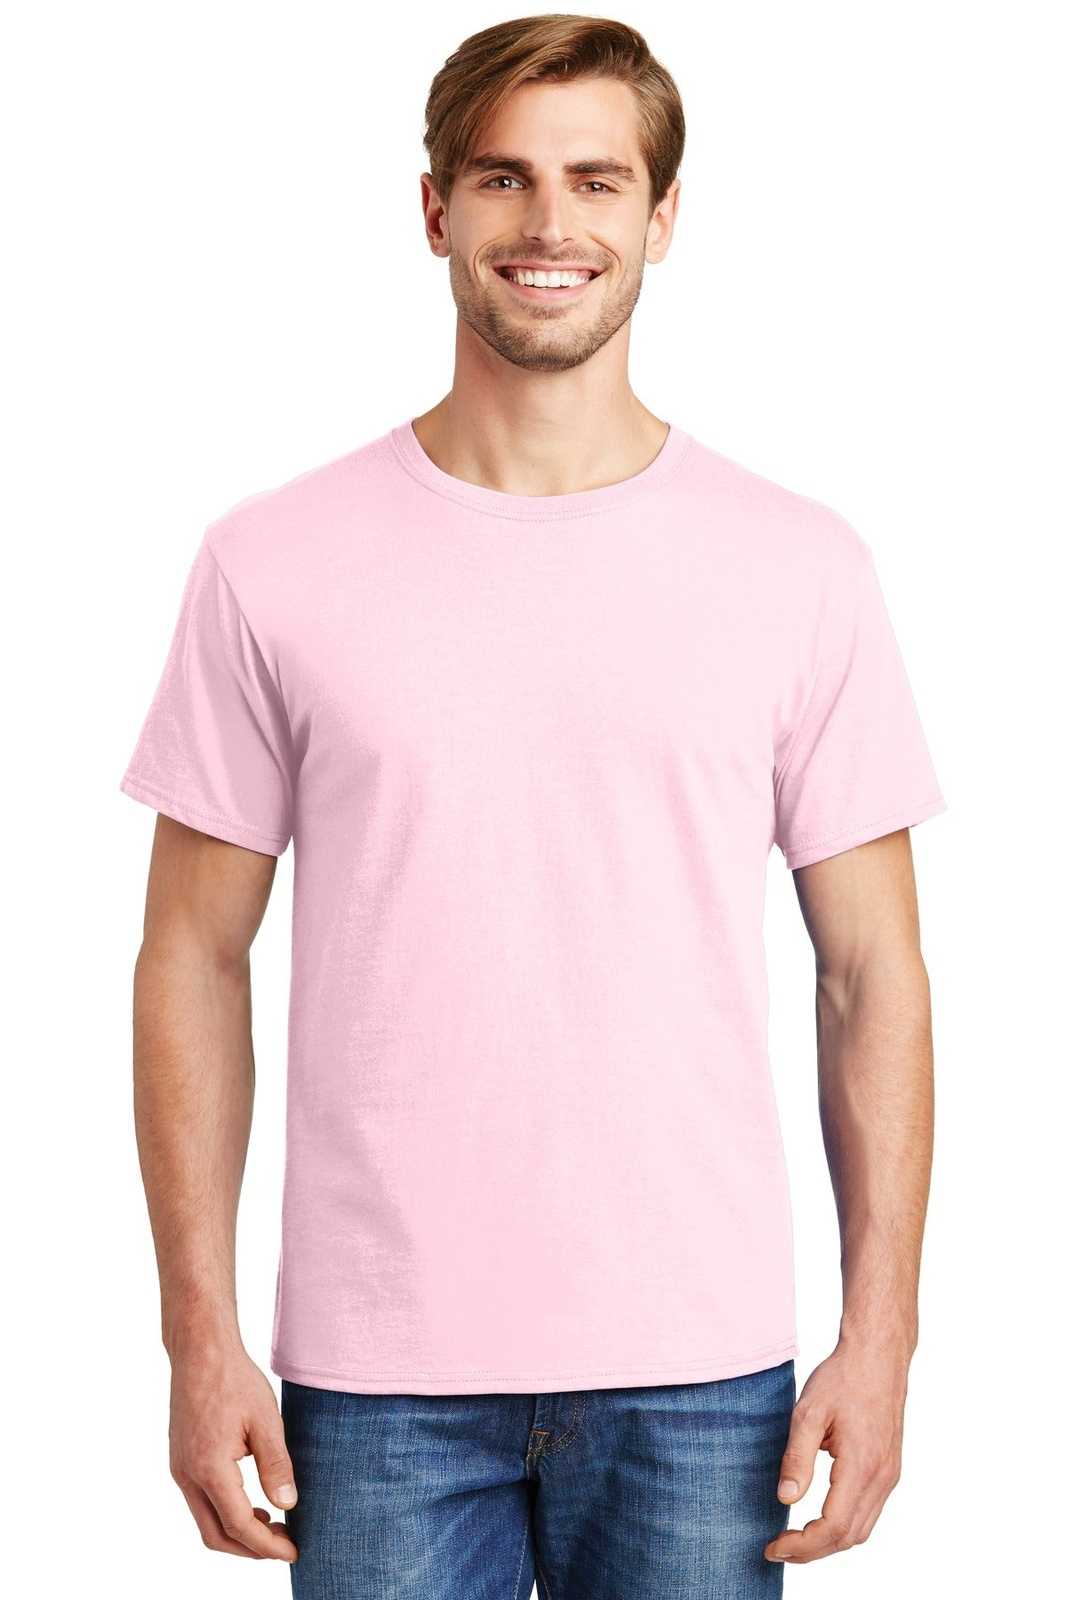 Hanes 5280 Comfortsoft 100% Cotton T-Shirt - Pale Pink